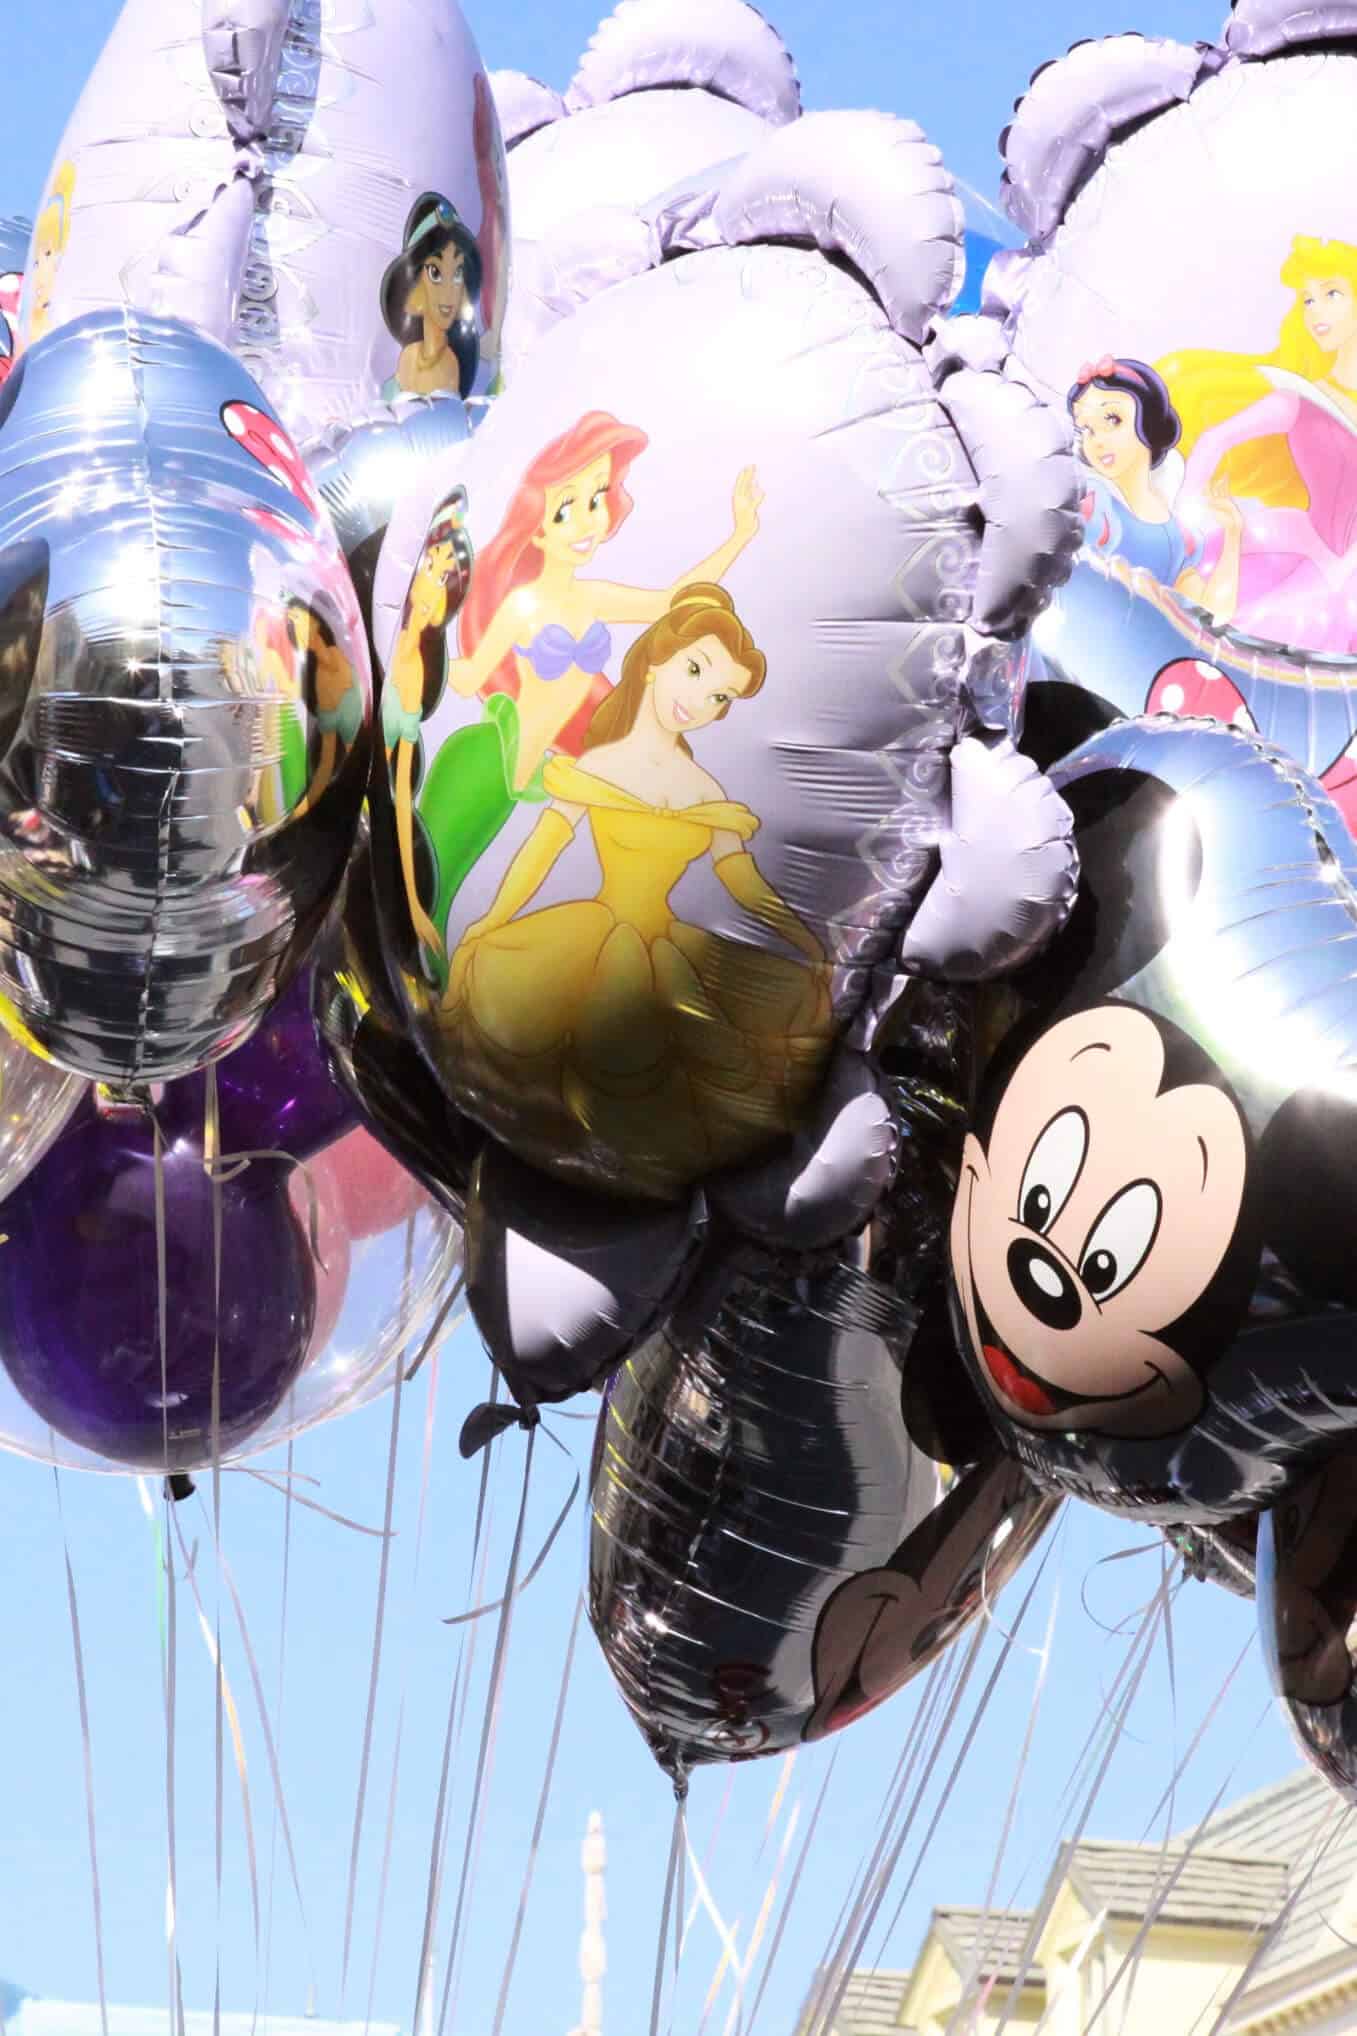 Ballons at Disneyland